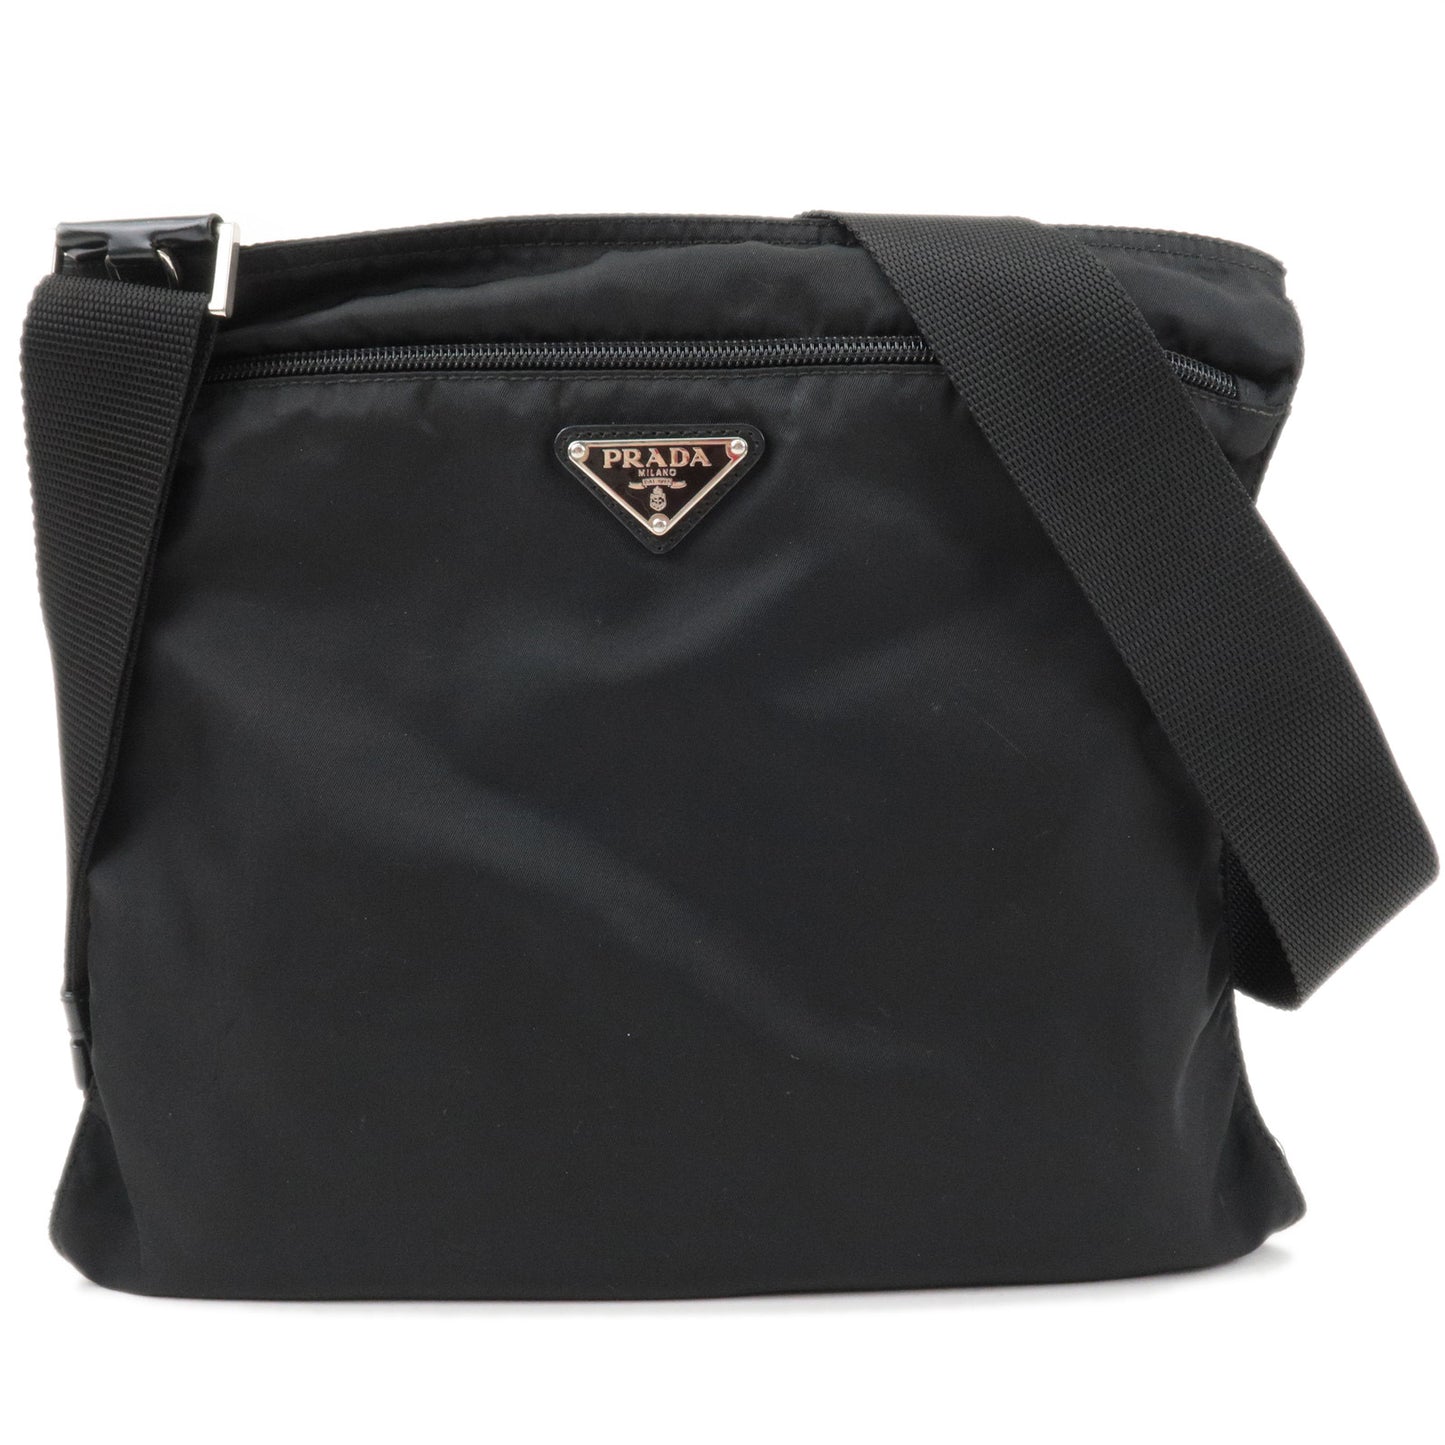 PRADA-Logo-Nylon-Leather-Shoulder-Bag-Crossbody-Bag-Black-BT175Z